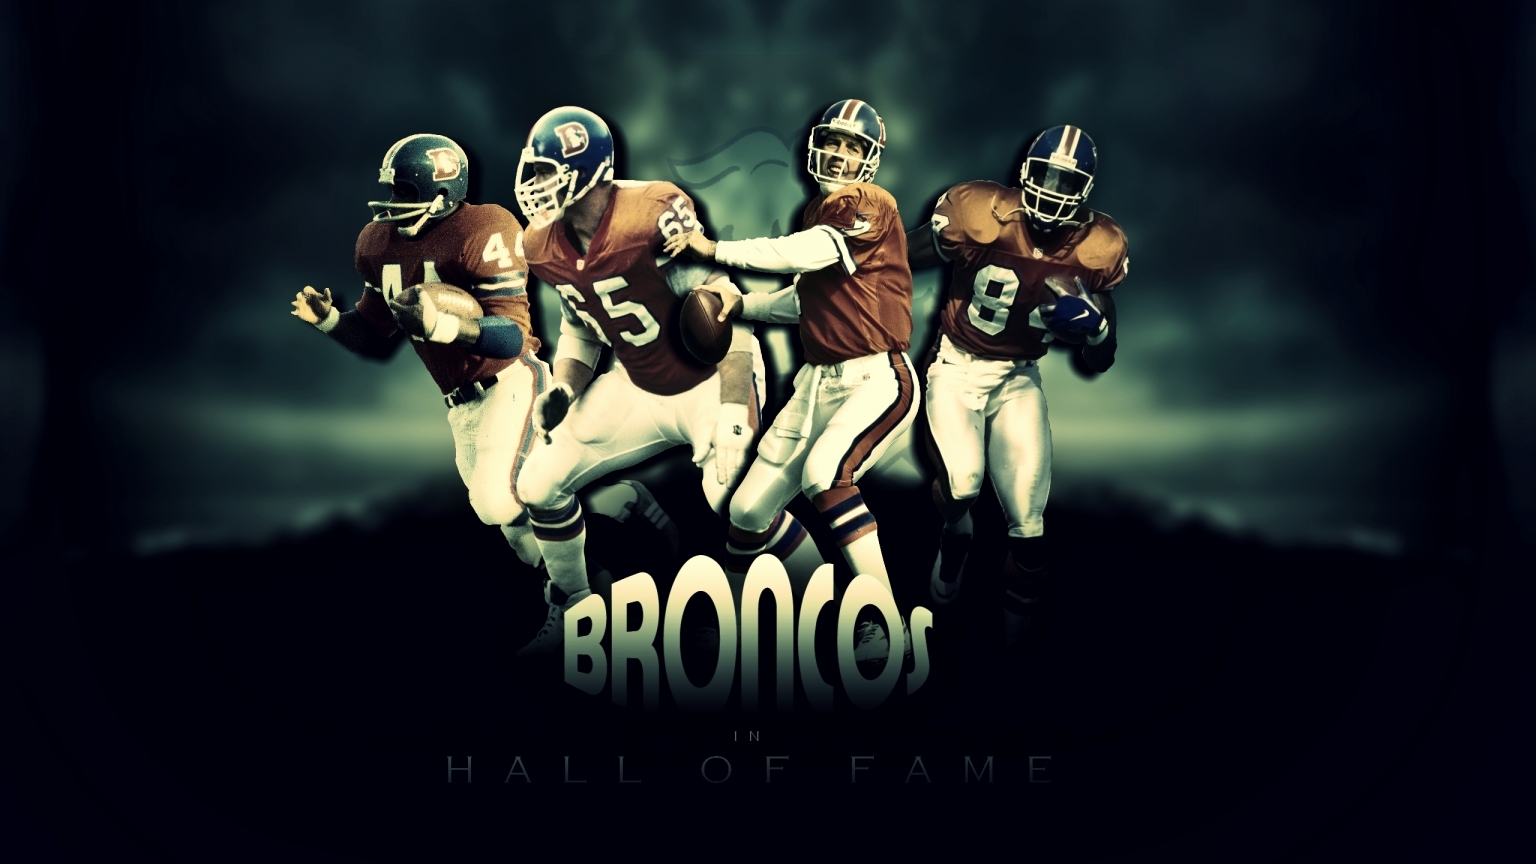 Broncos Hall of Fame for 1536 x 864 HDTV resolution